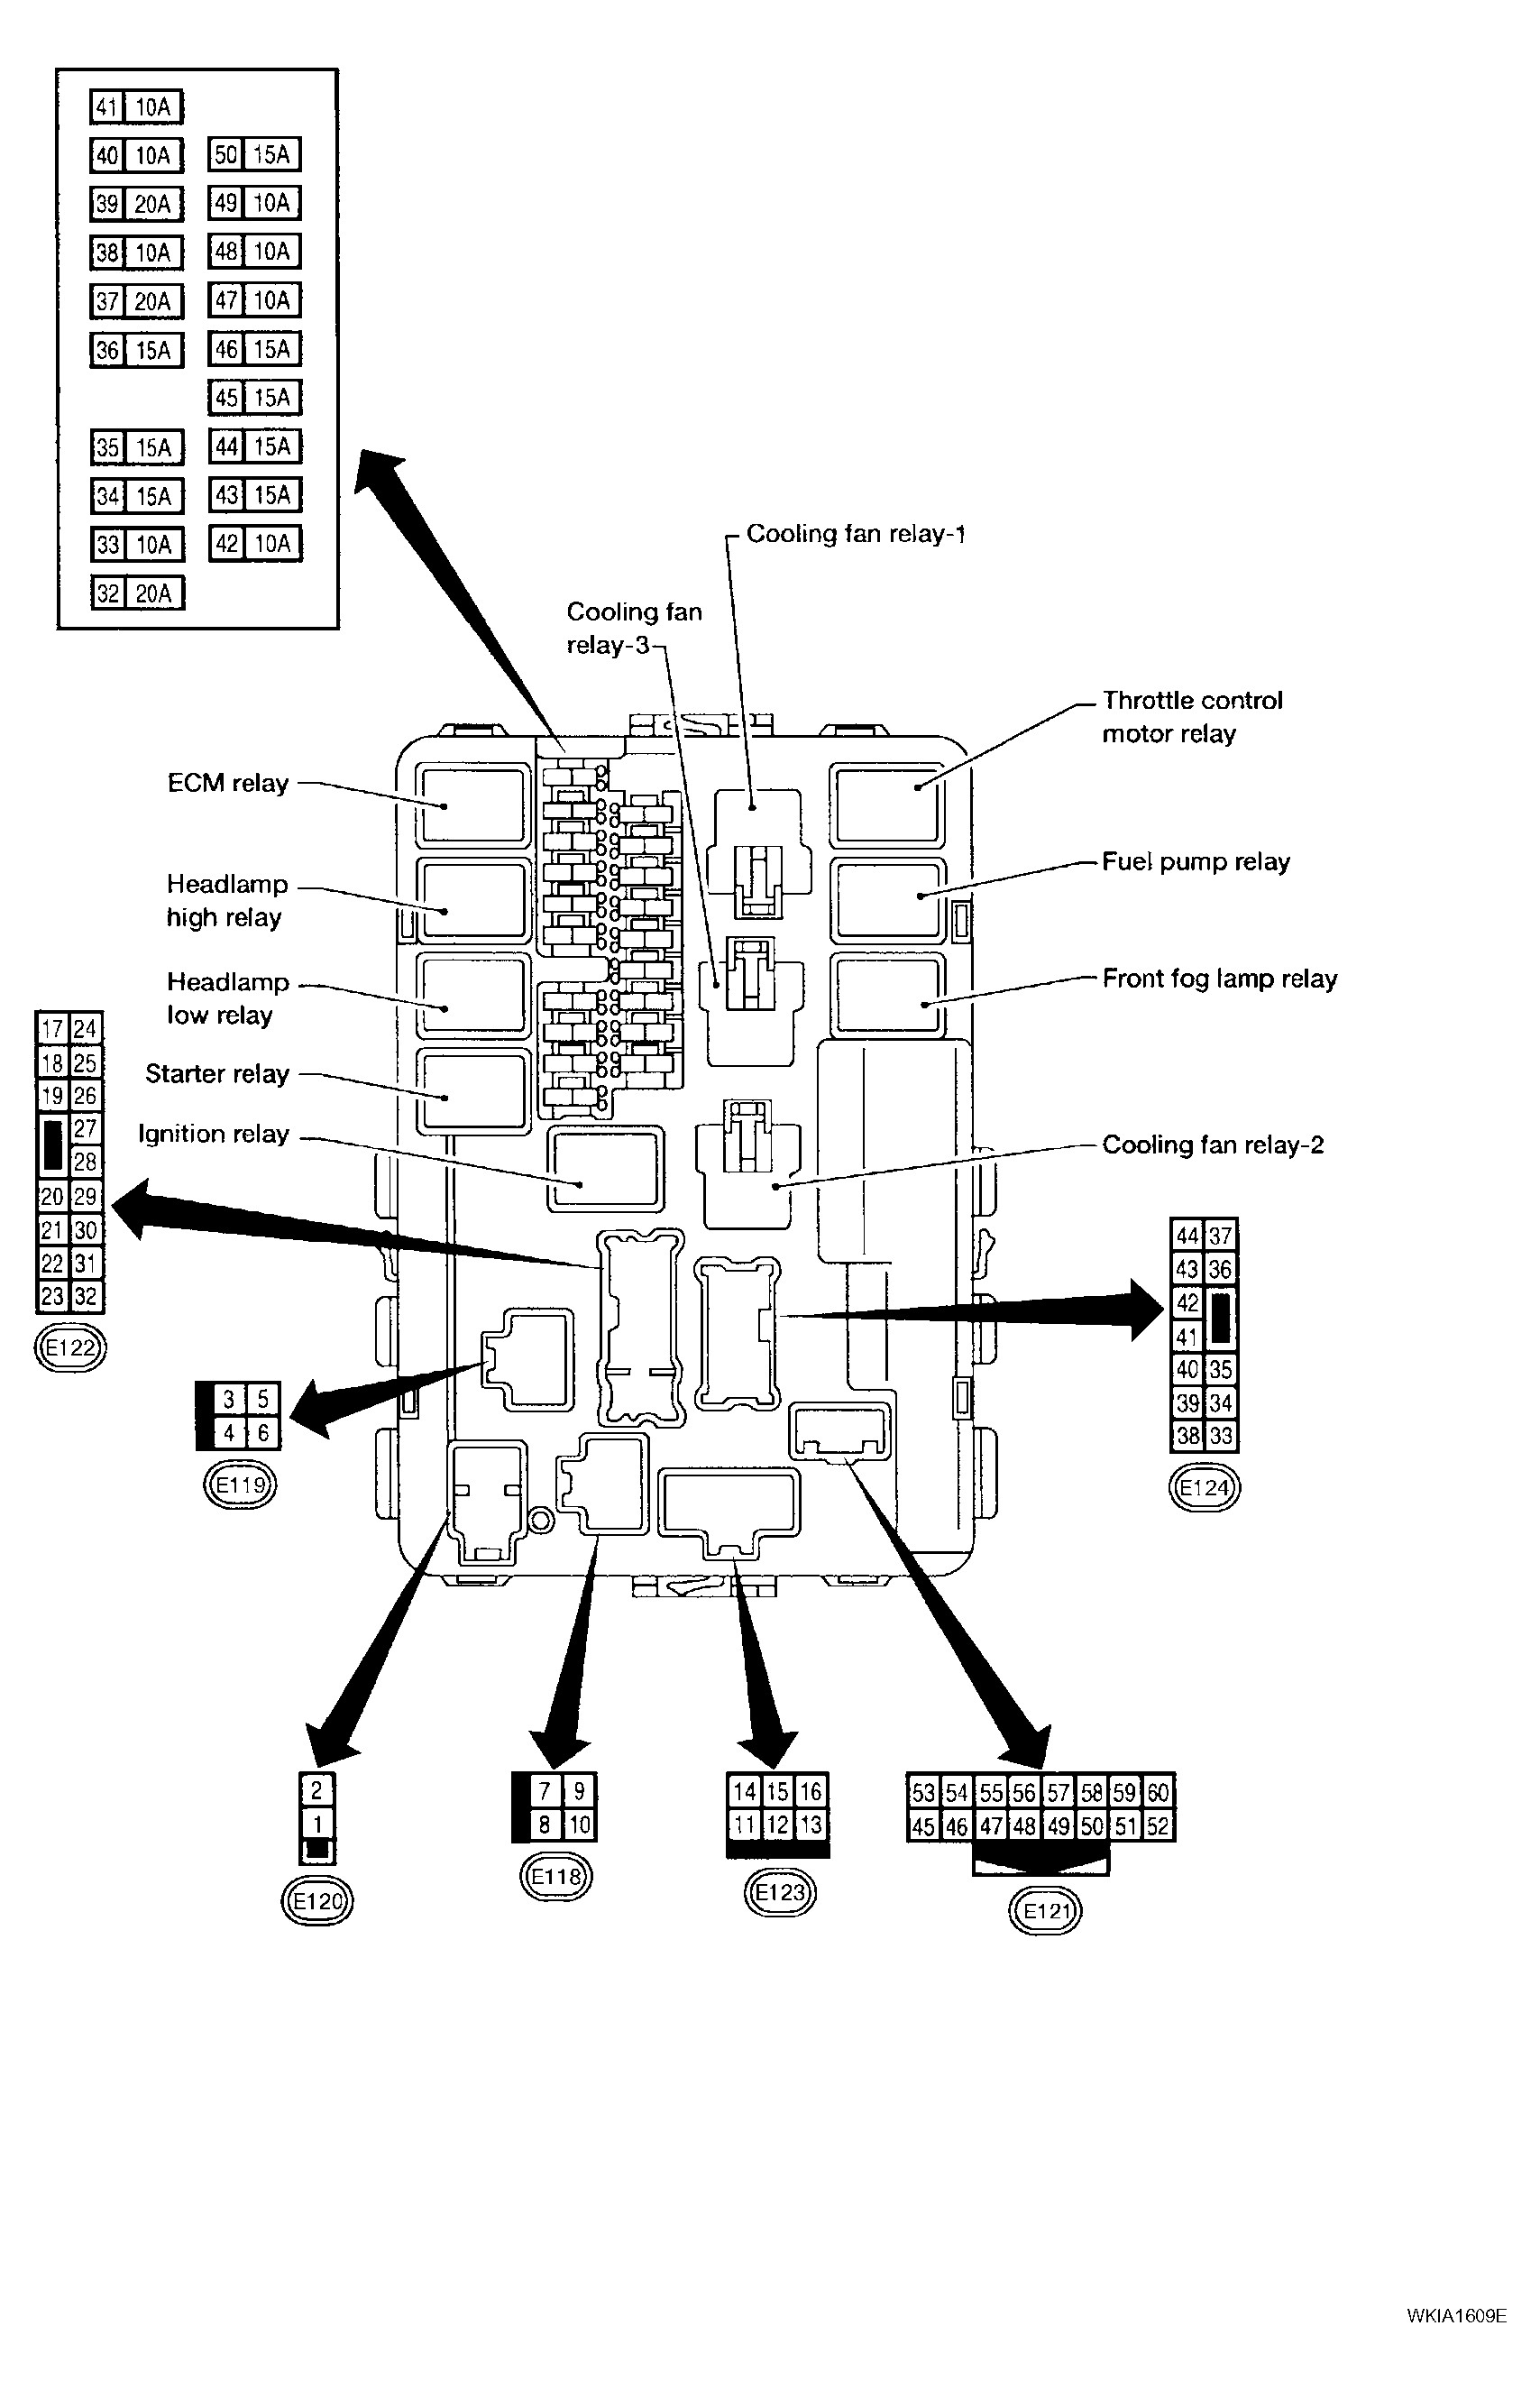 2000 Nissan Sentra Engine Diagram Nissan Maxima Engine Diagram Moreover Nissan Altima Engine Diagram Of 2000 Nissan Sentra Engine Diagram